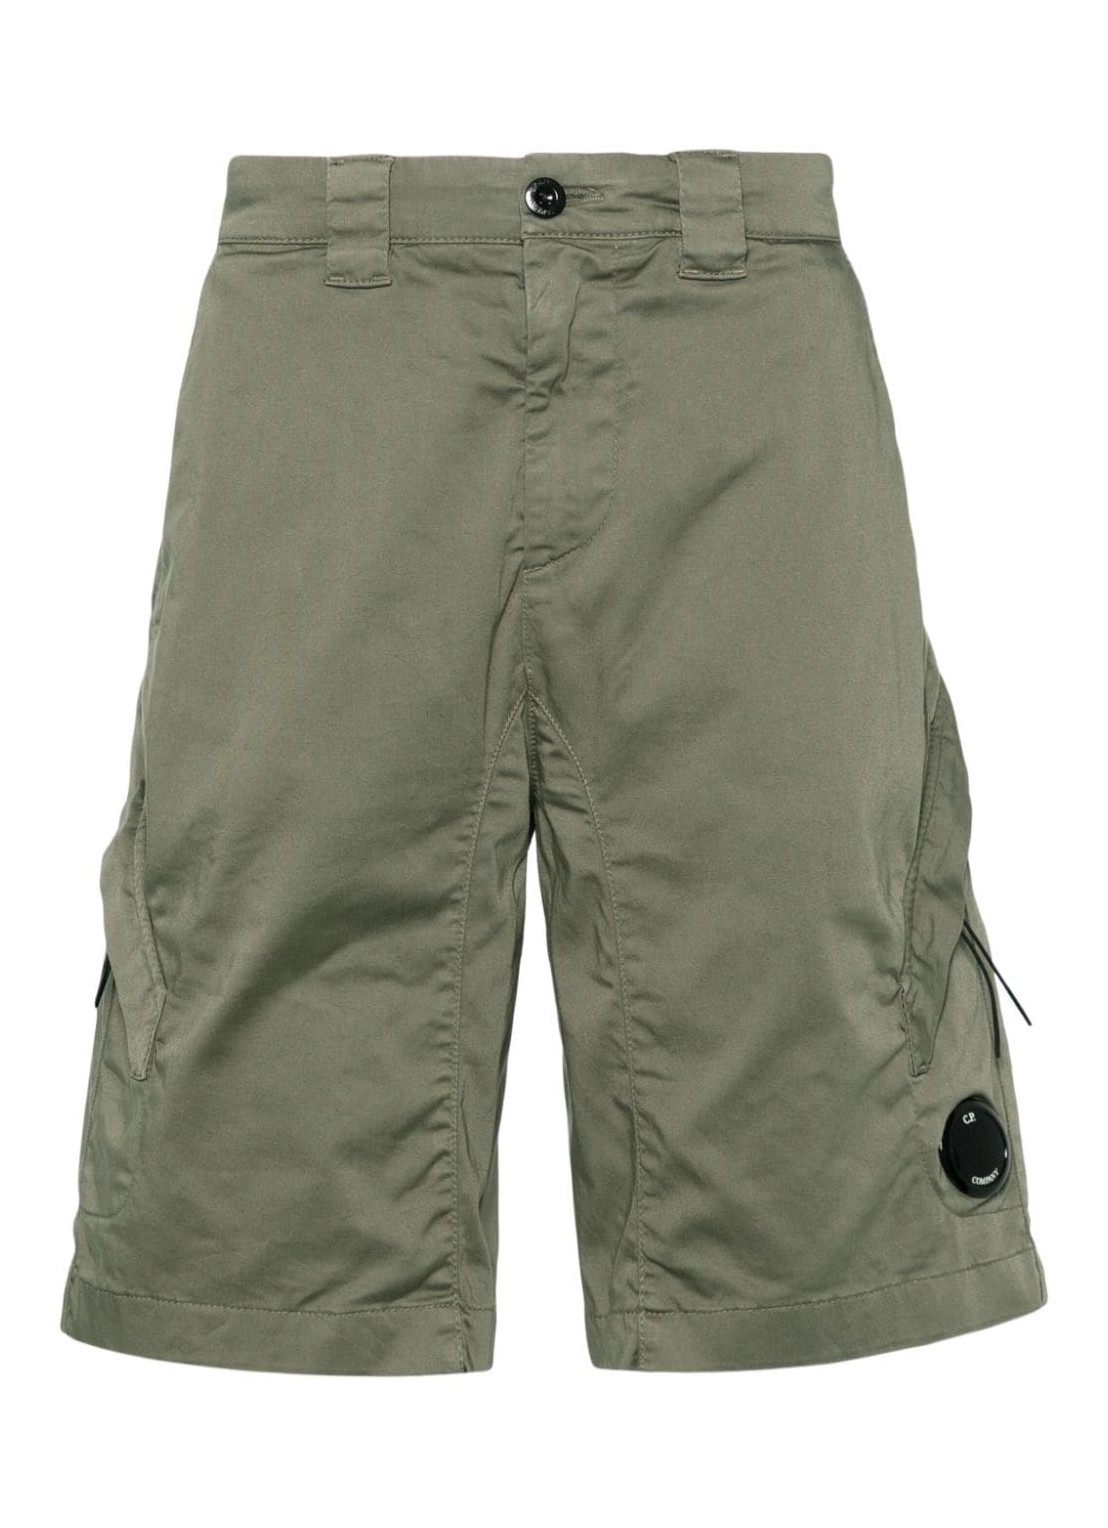 Pantalon corto c.p.company short pant man stretch sateen utility shorts 16cmbe200a005694g 627 talla 